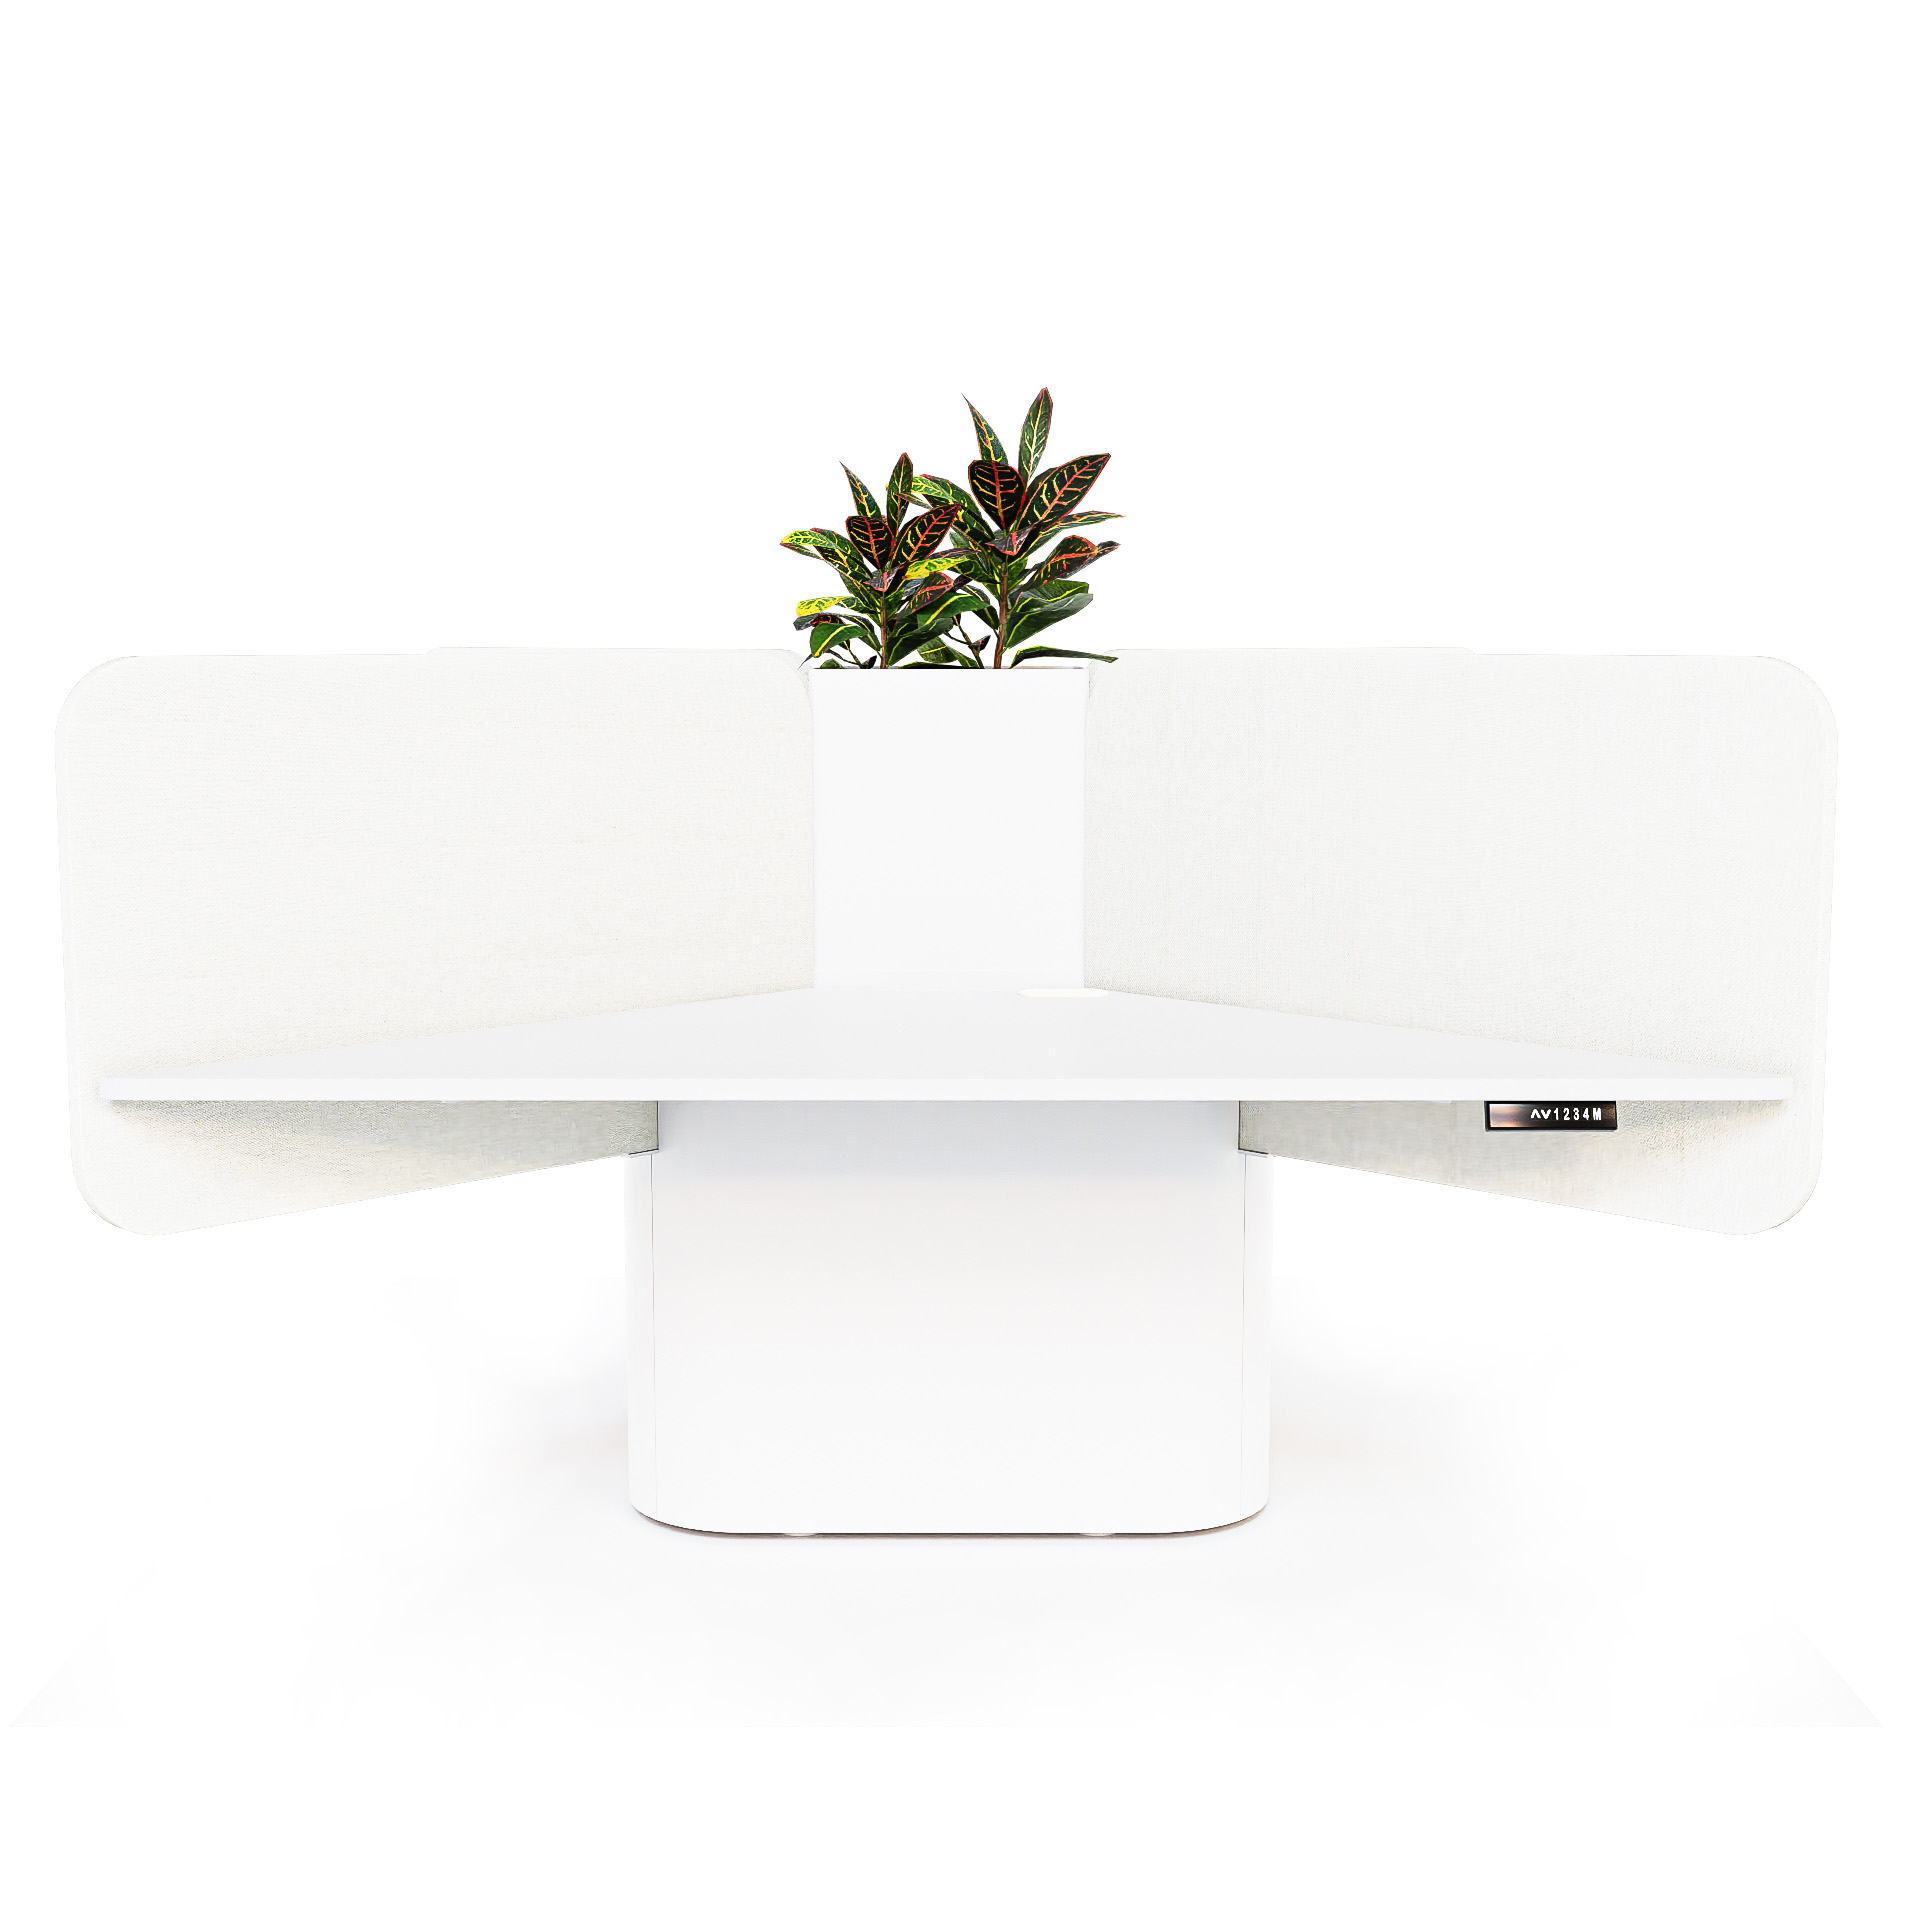 Bemben Cruciform Drum Base Sit Stand Desk With Planter Box FRONT WHITE